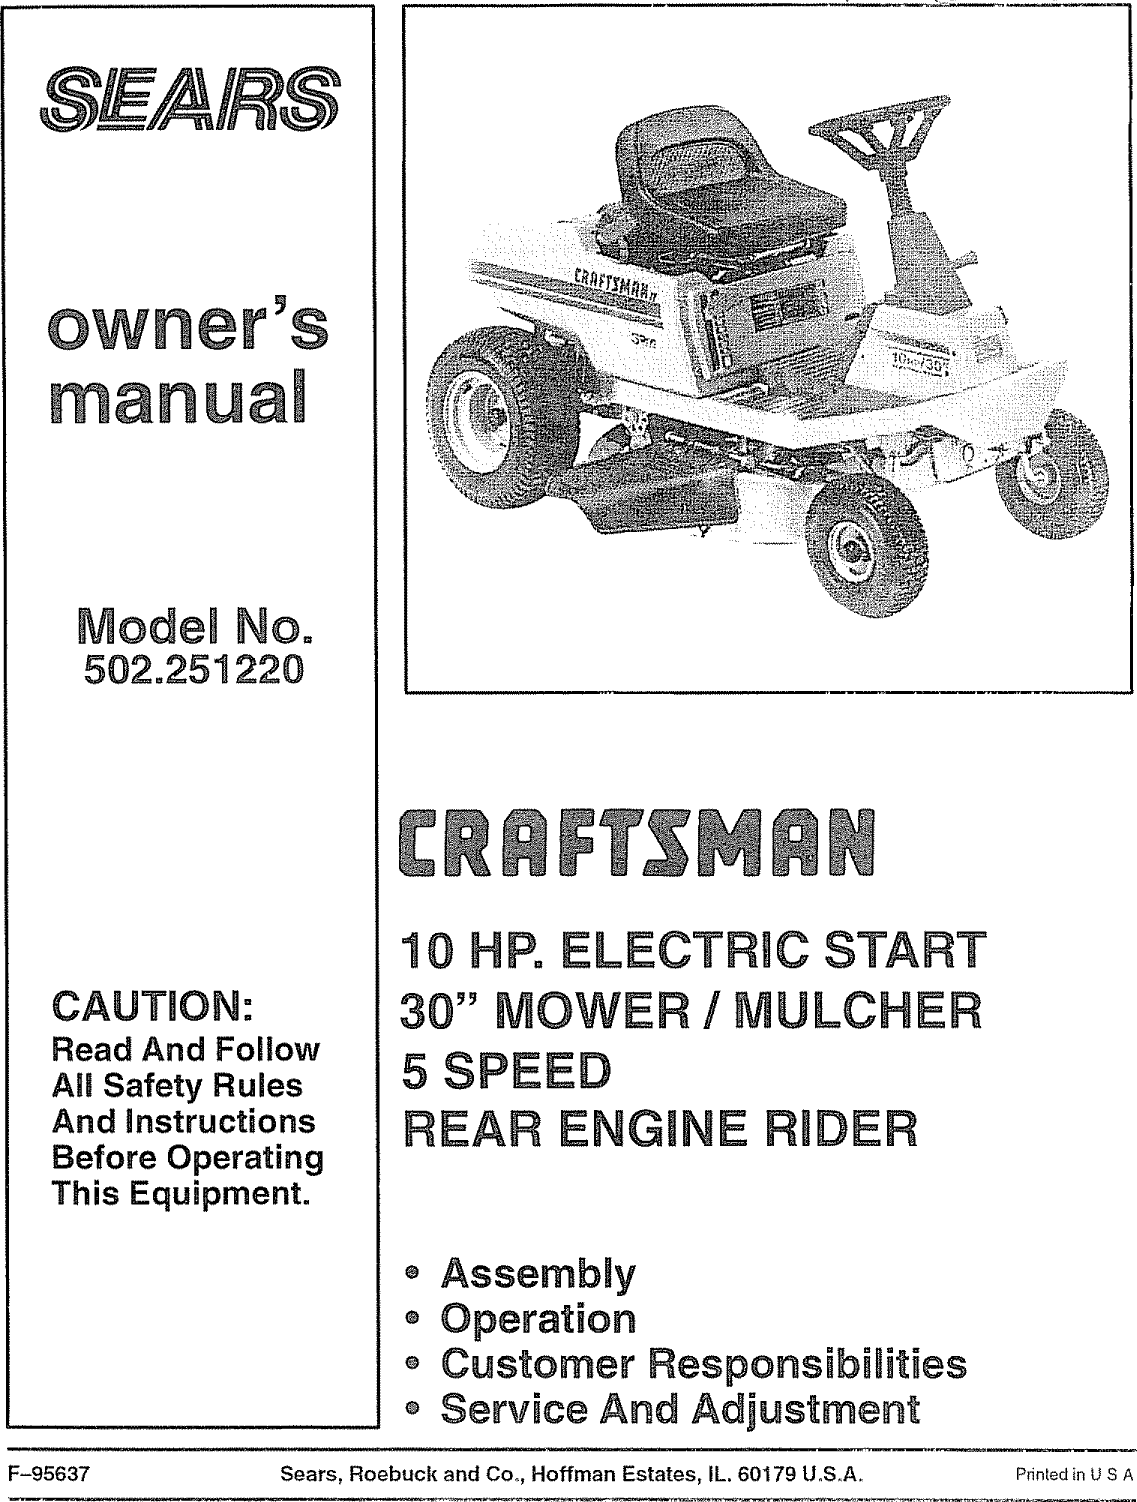 Craftsman R140 Manual